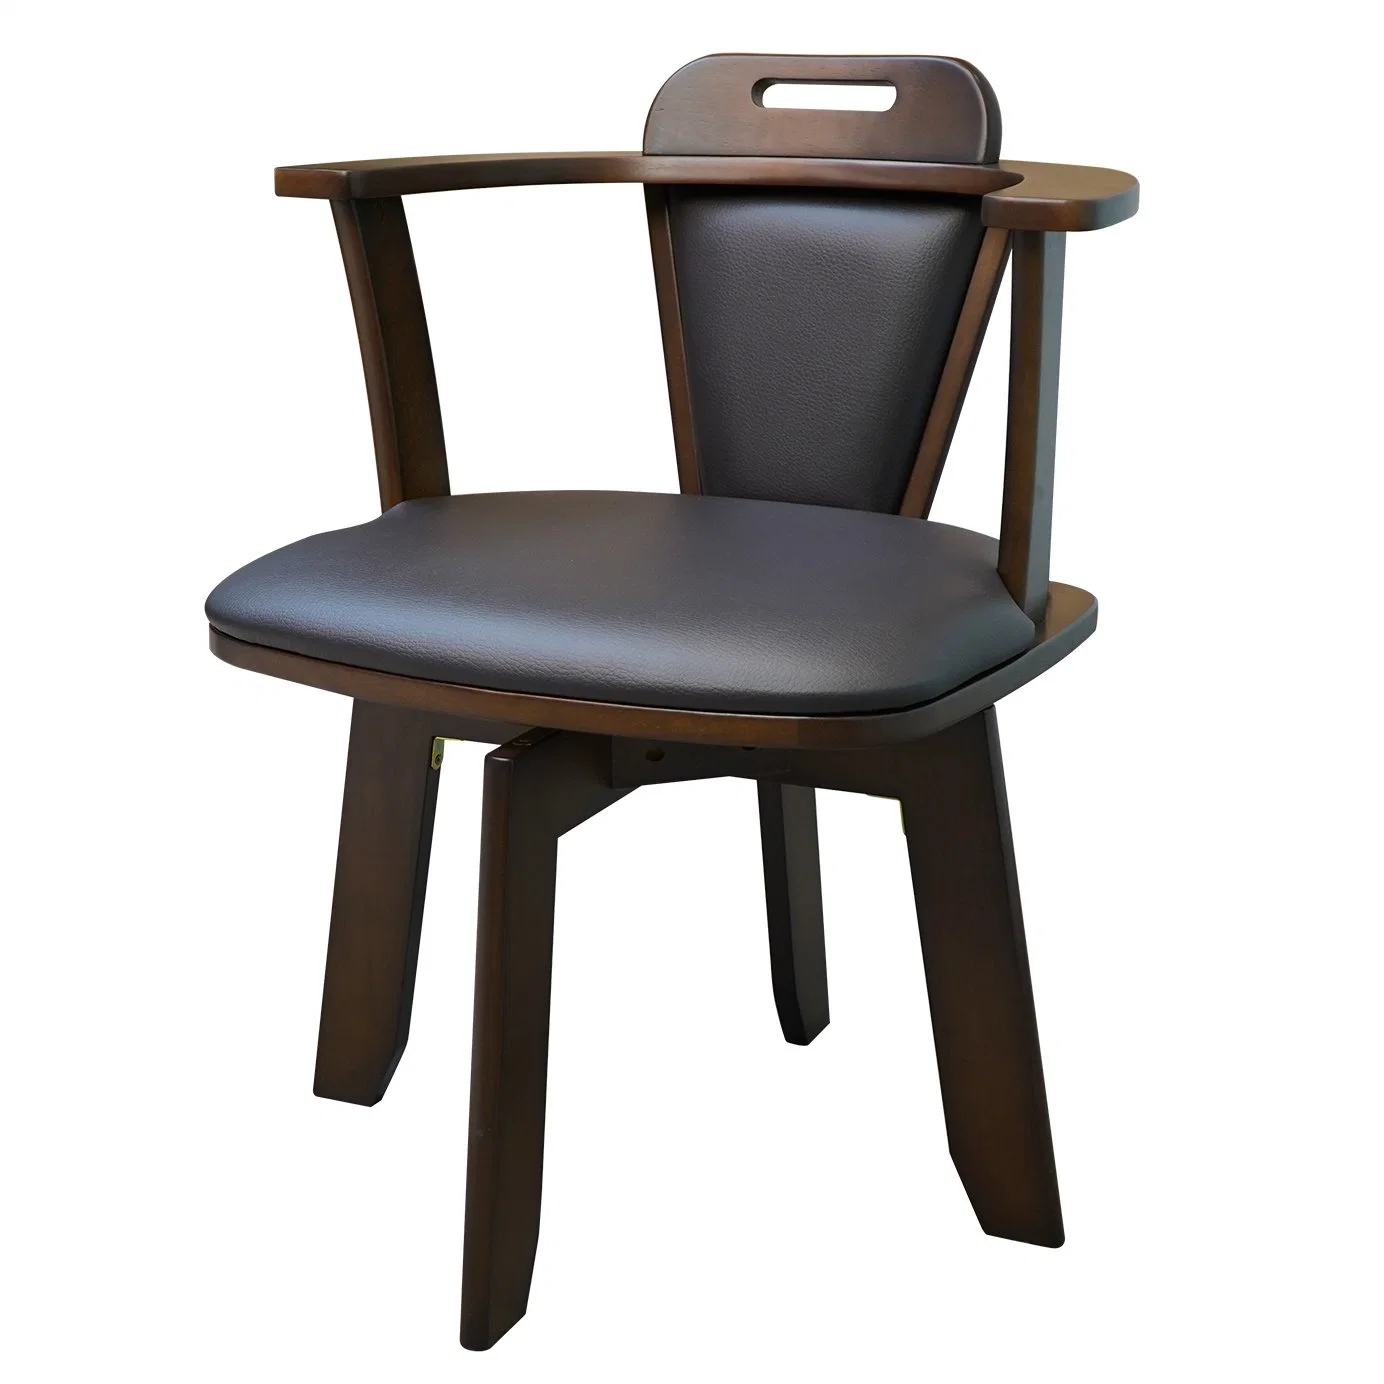 Стул стул стул стул стул стул стул стул стола для стола стула